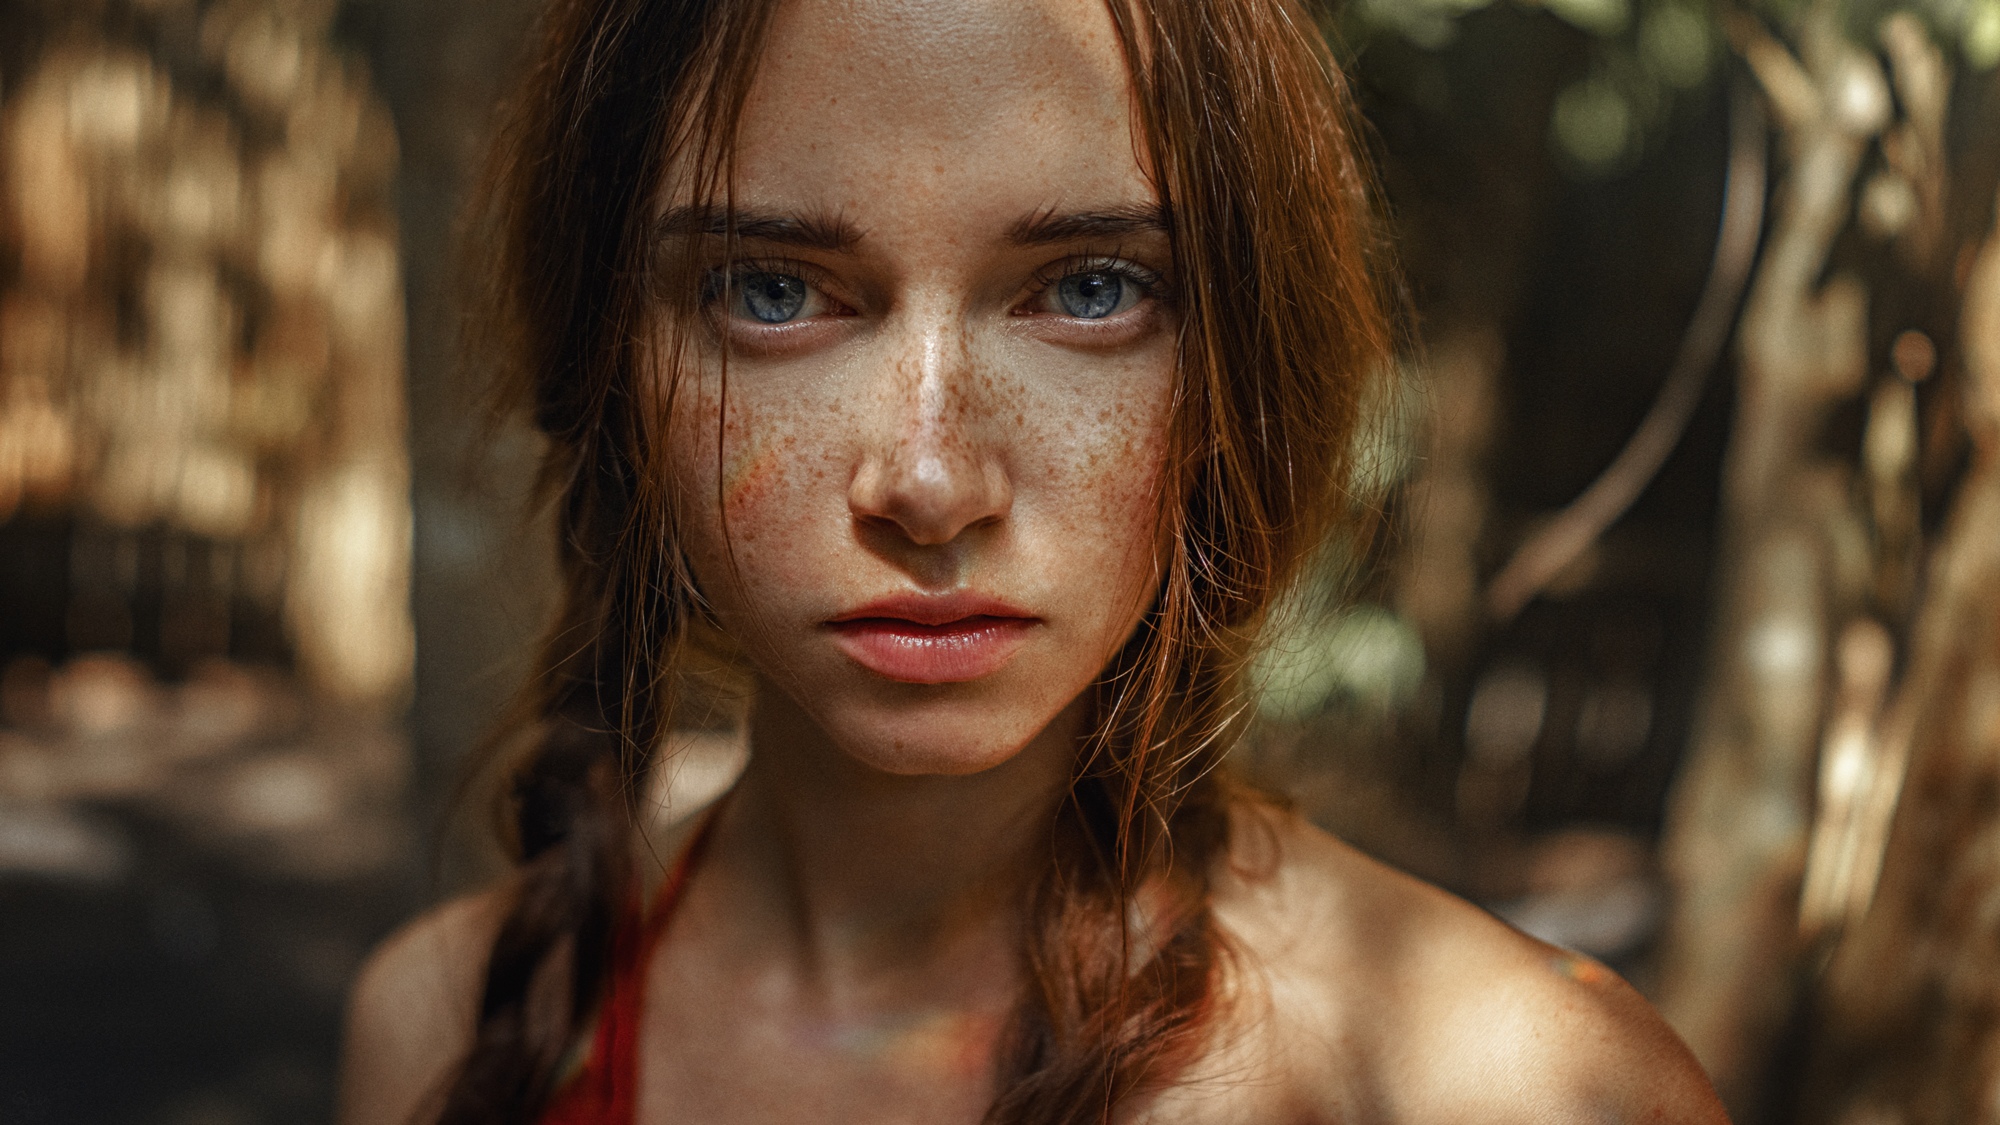 People 2000x1125 women model face redhead portrait women outdoors freckles braids bare shoulders closeup blue eyes depth of field Anastasia Nelen Georgy Chernyadyev